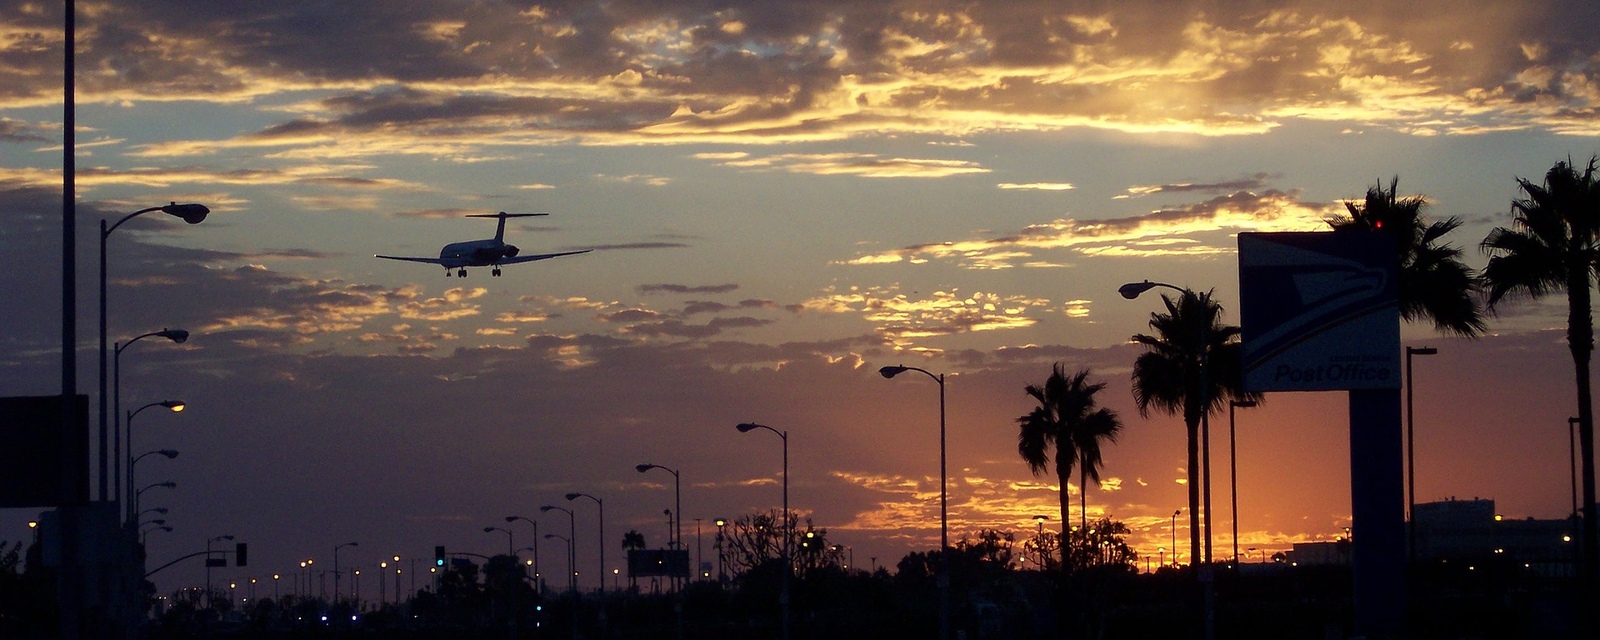 Los Angeles Airport sundown